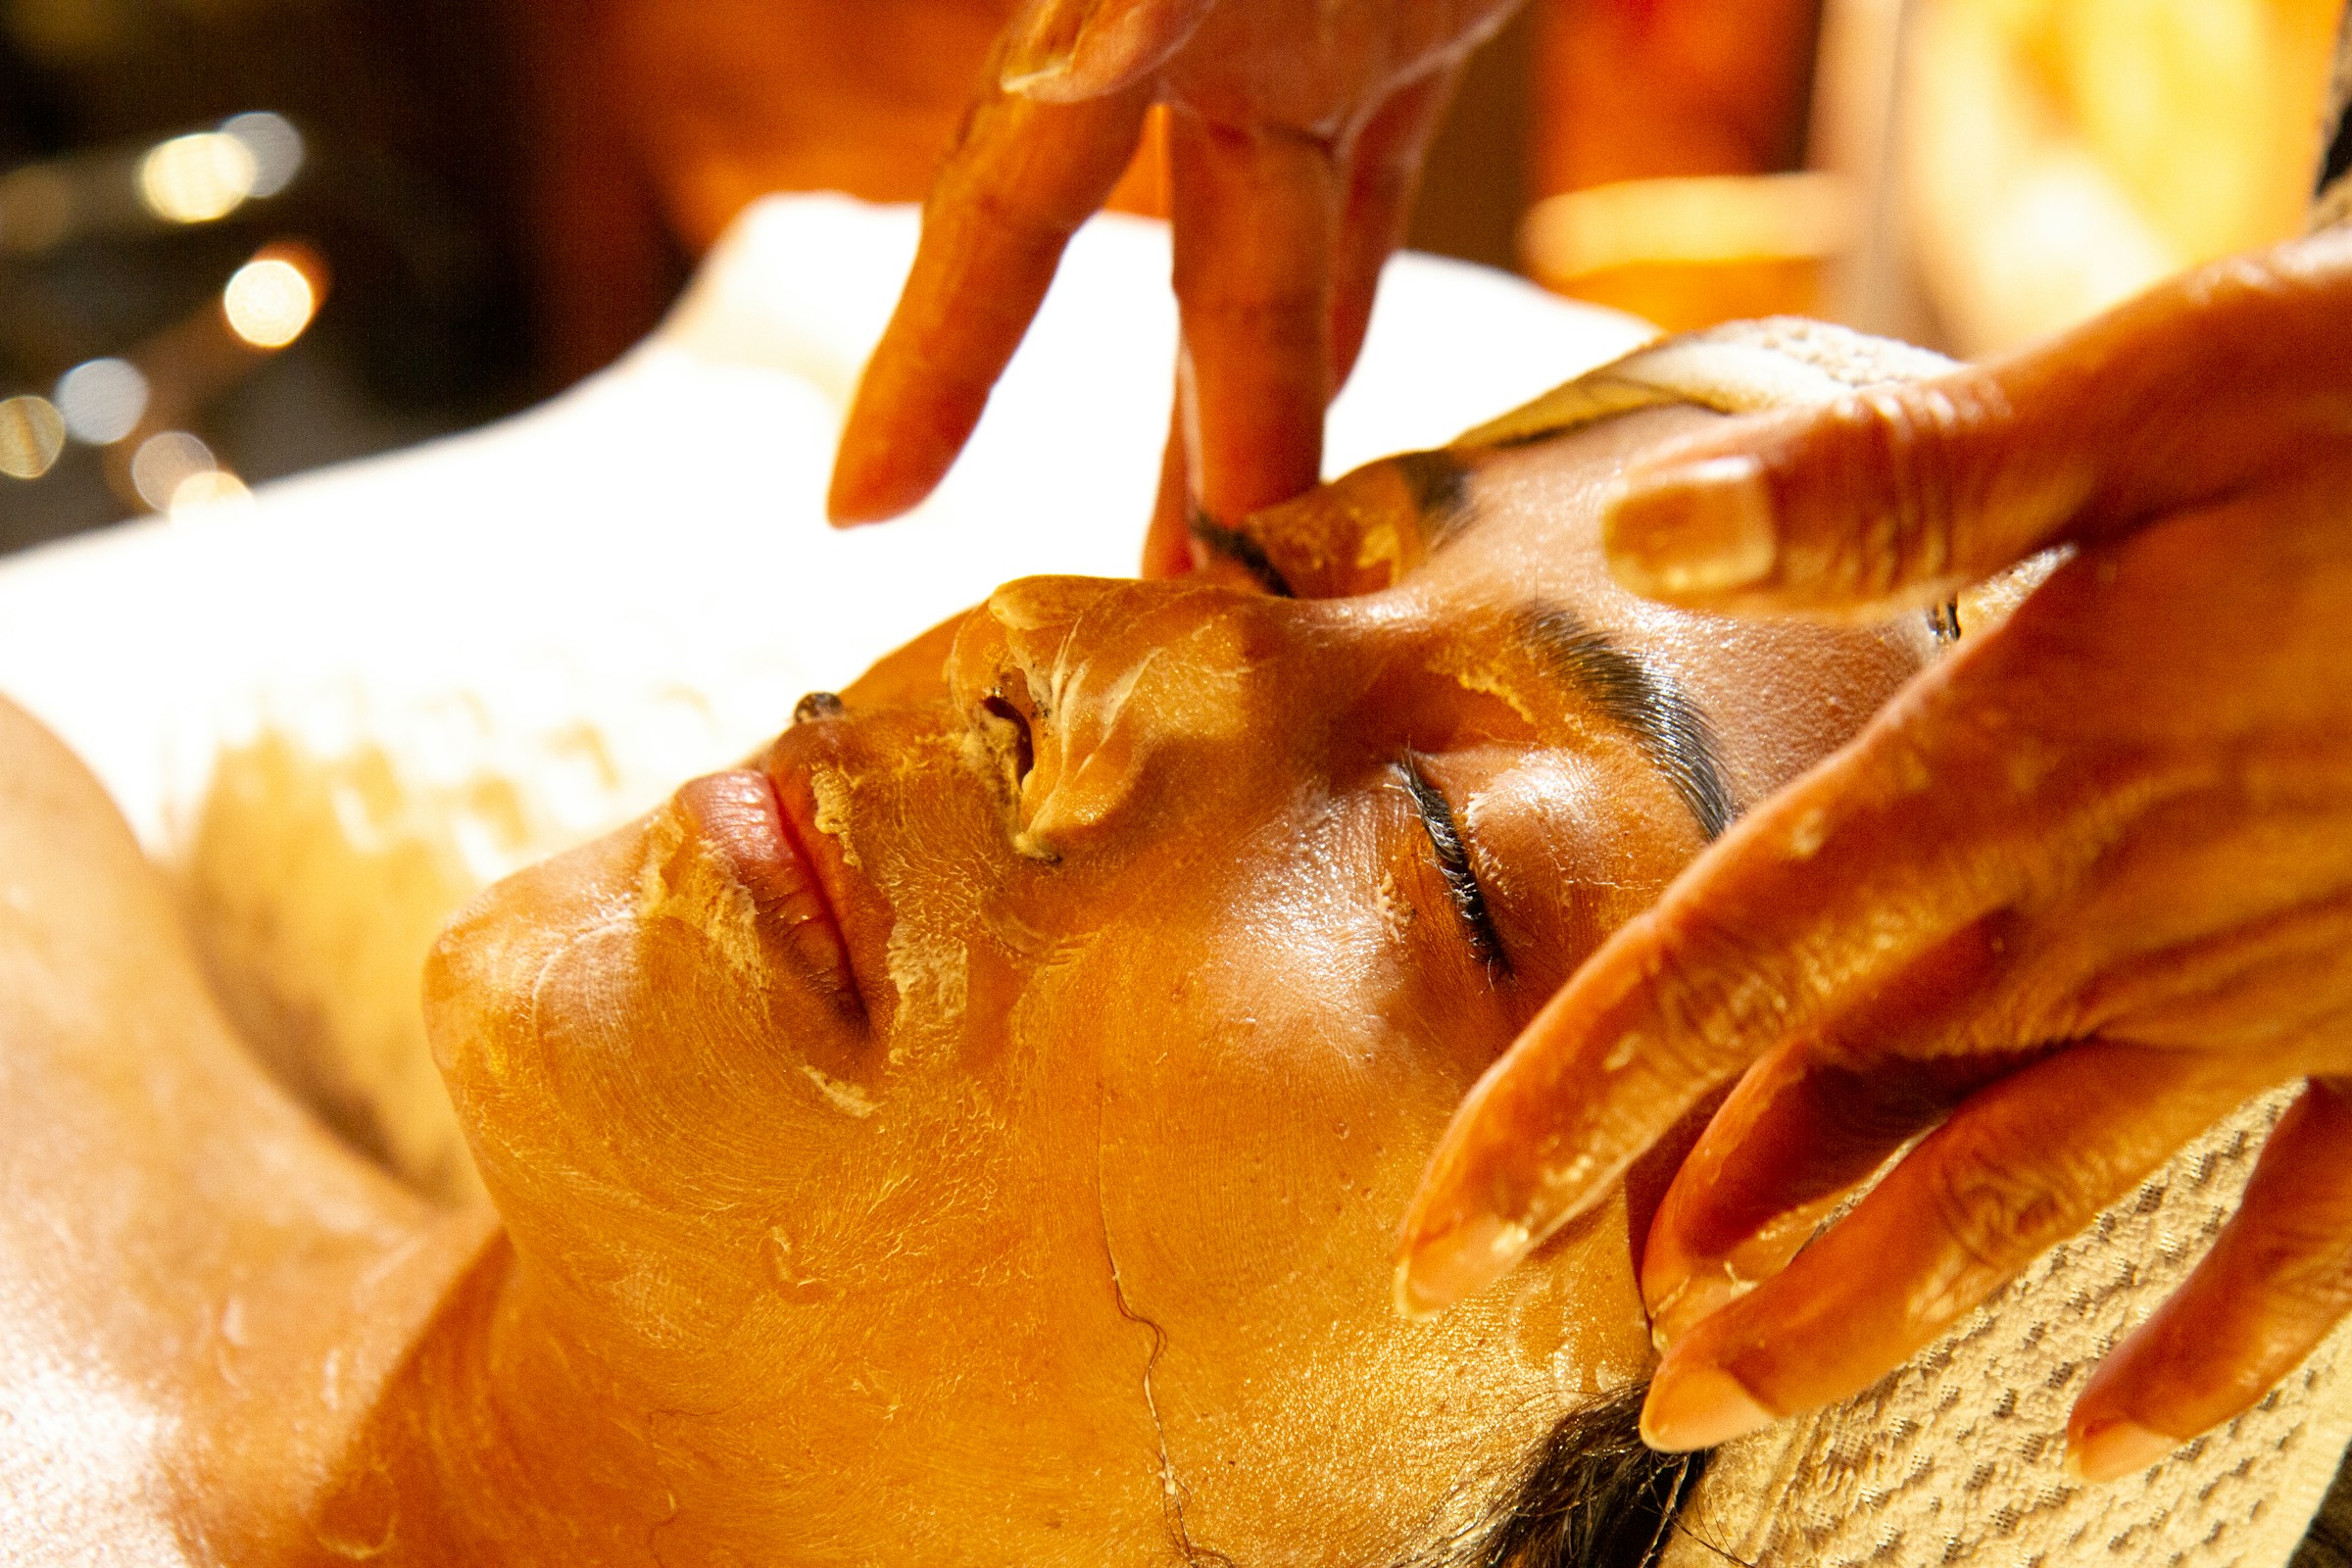 A woman getting a gold facial | Source: Unsplash